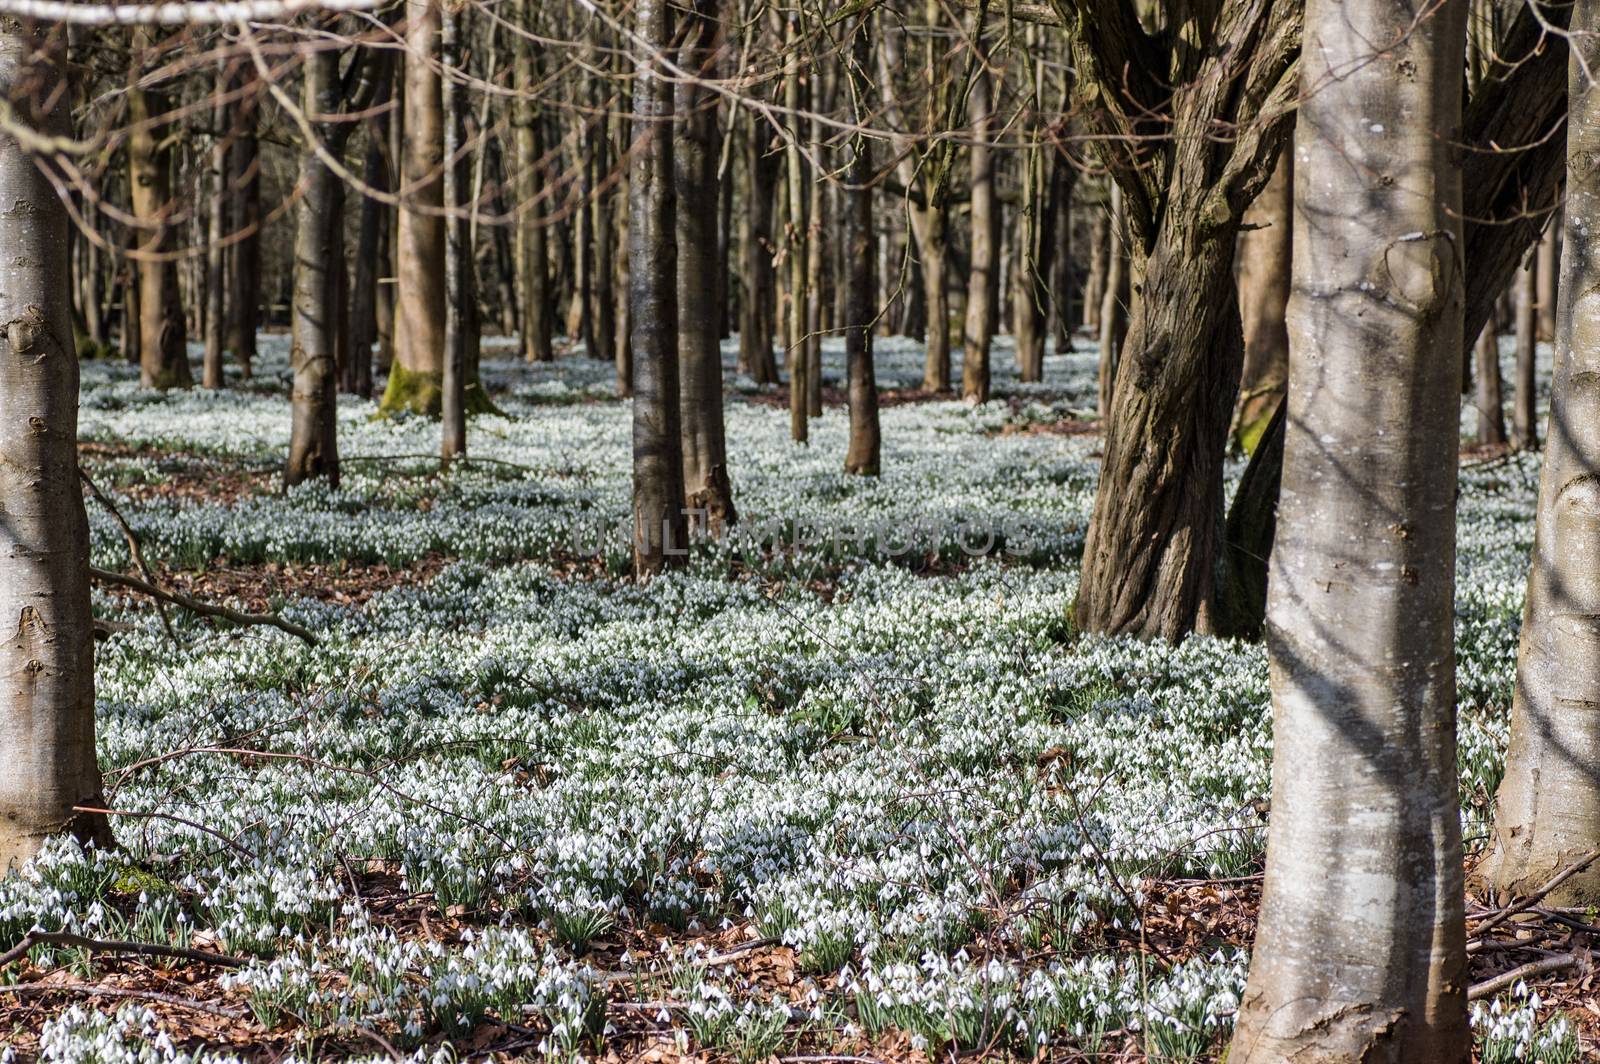 Wild snowdrops flowering in February. Welford Park near Newbury, Berkshire.